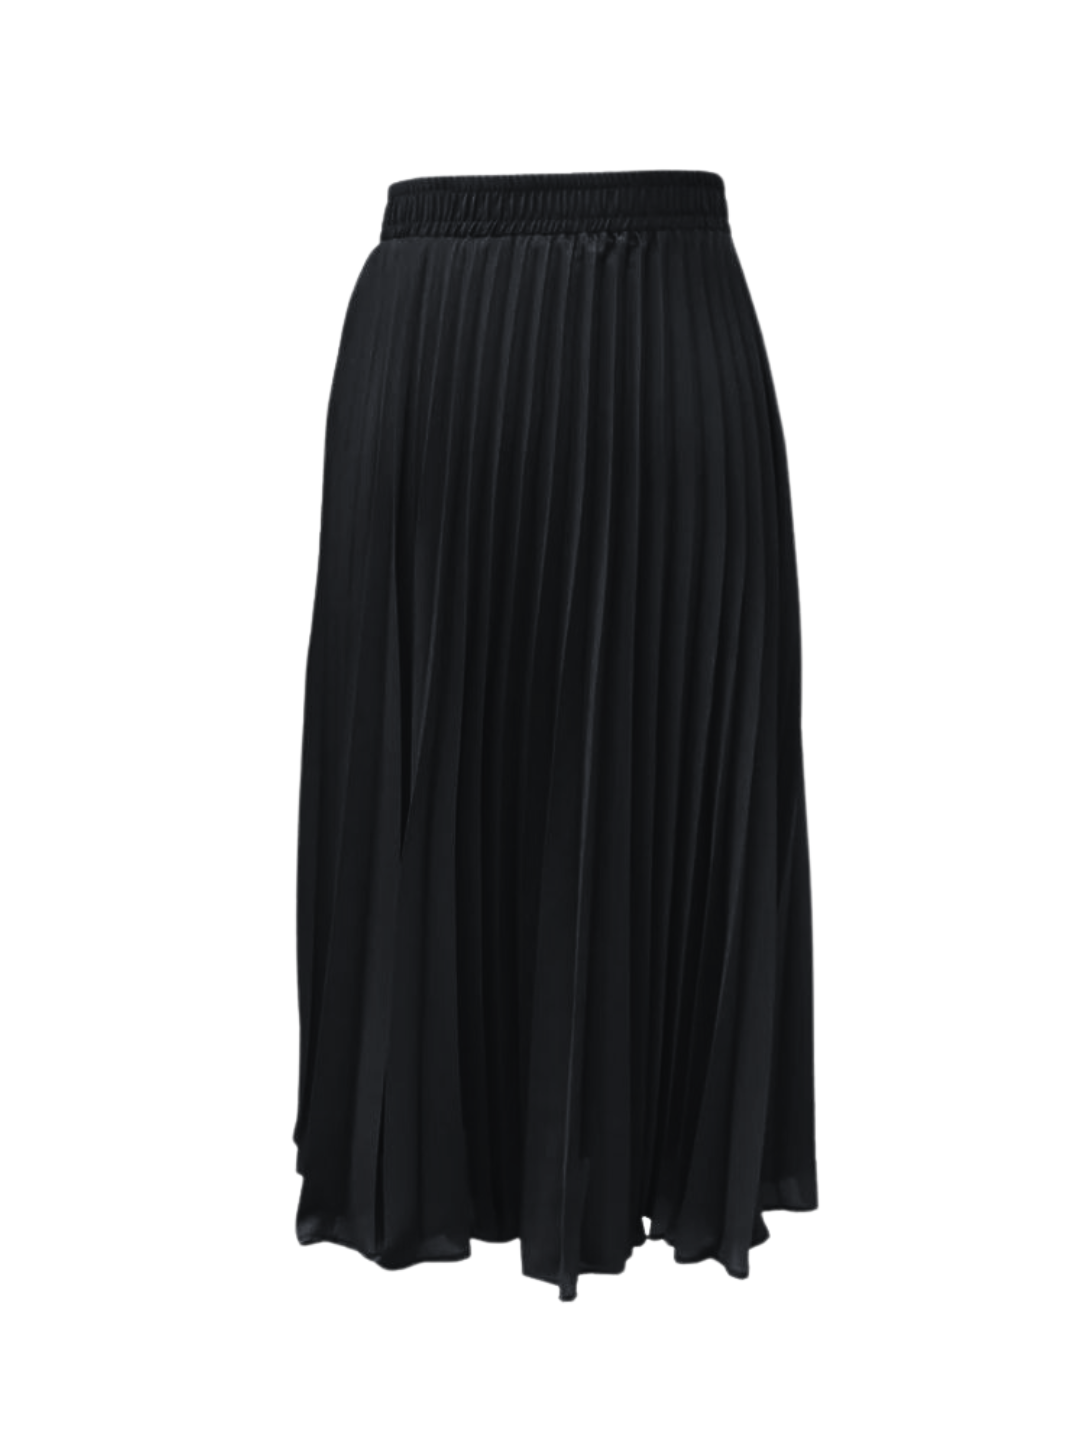 Coachella Skirt Mid Length (Black)